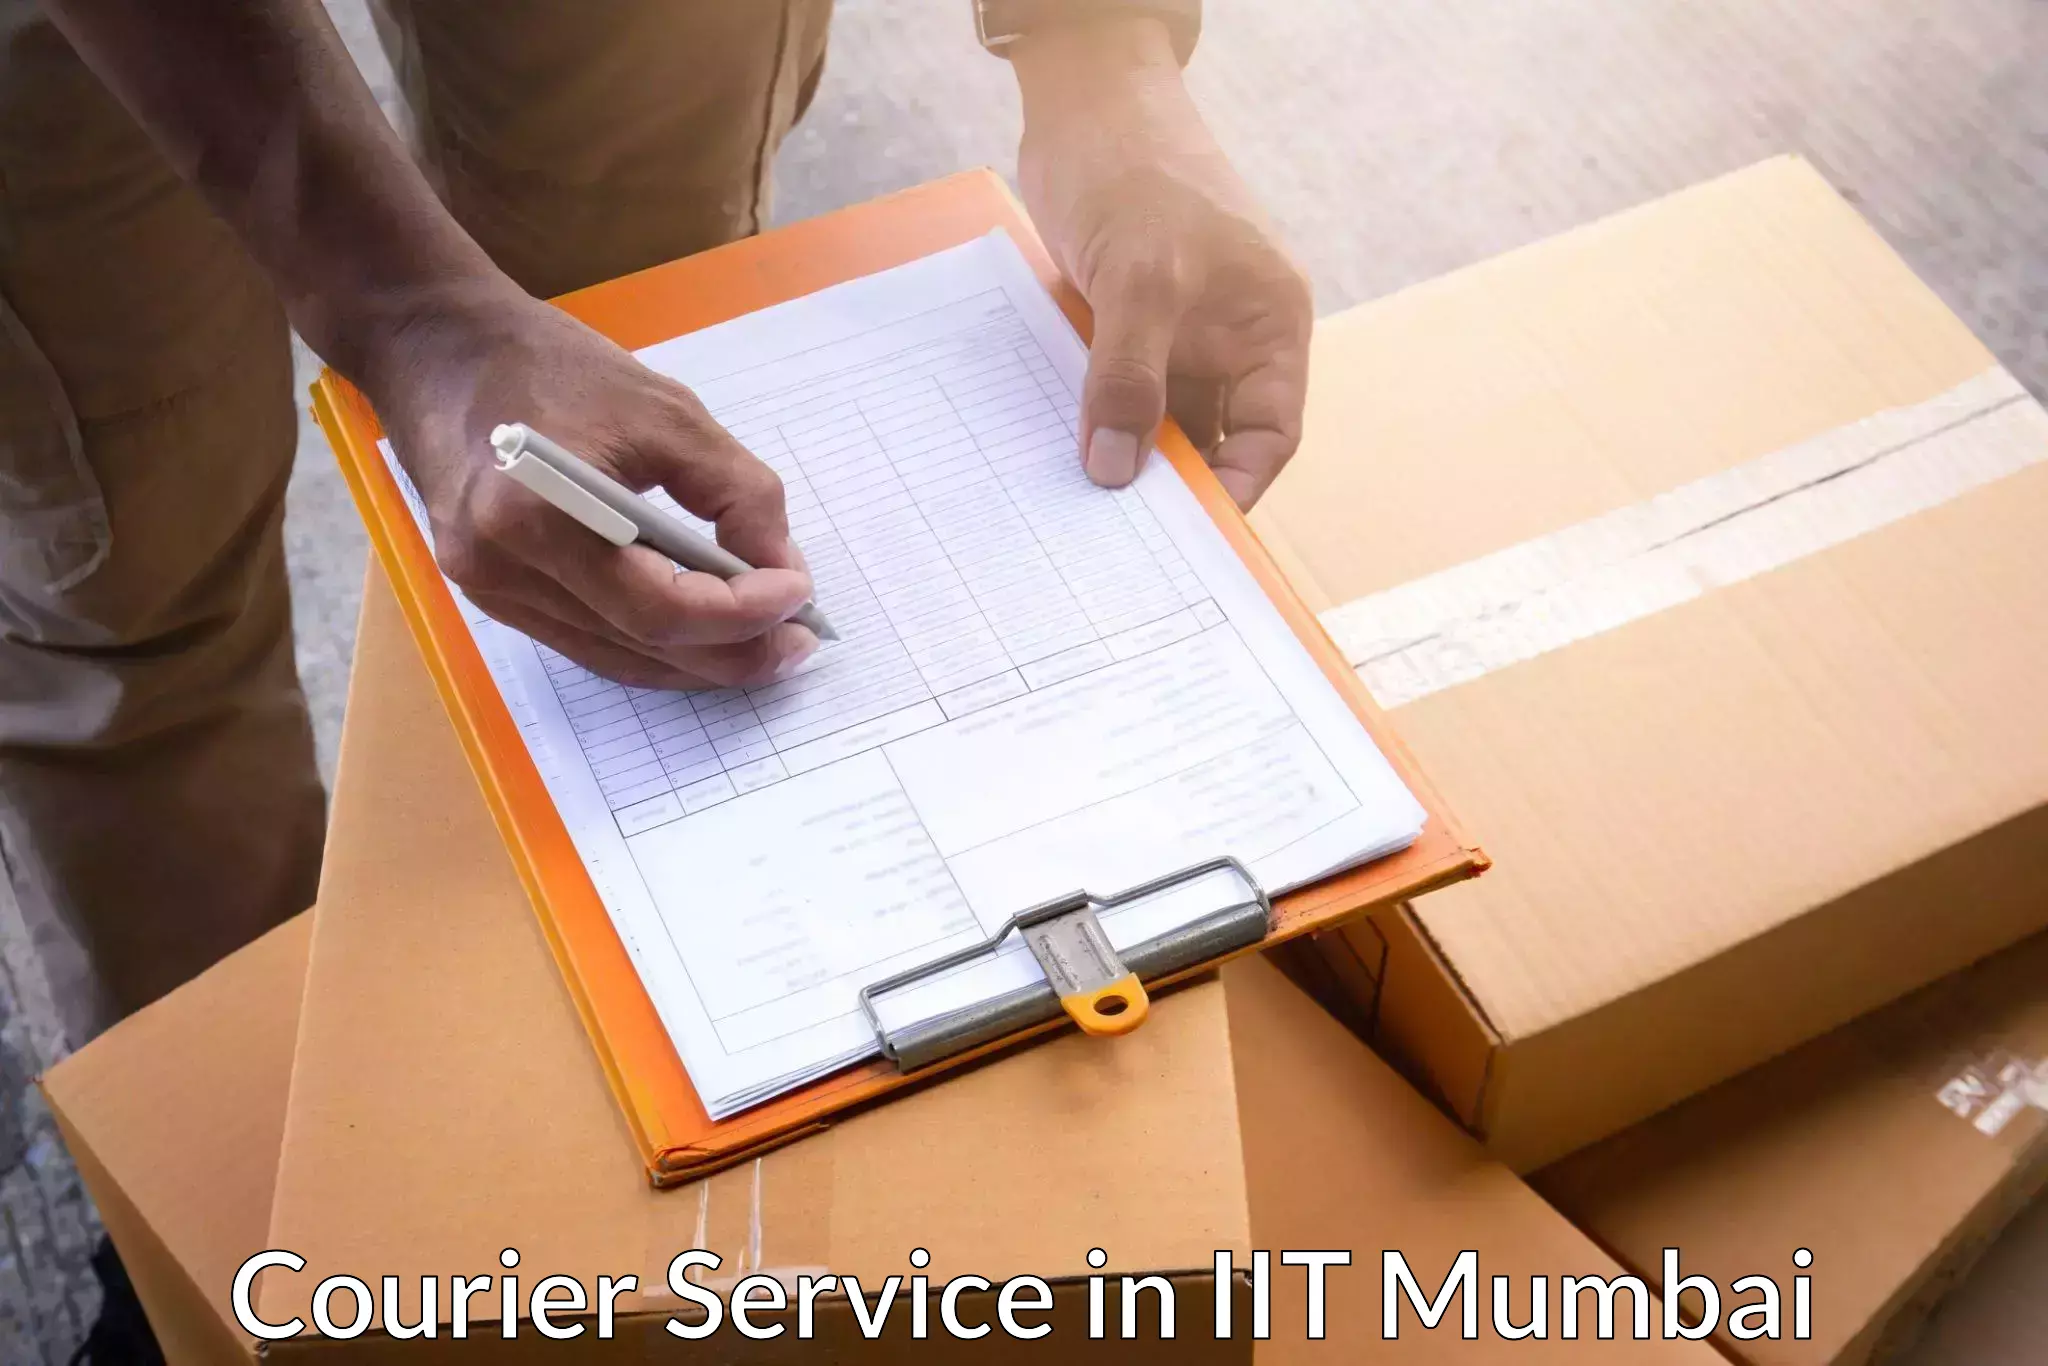 International courier rates in IIT Mumbai